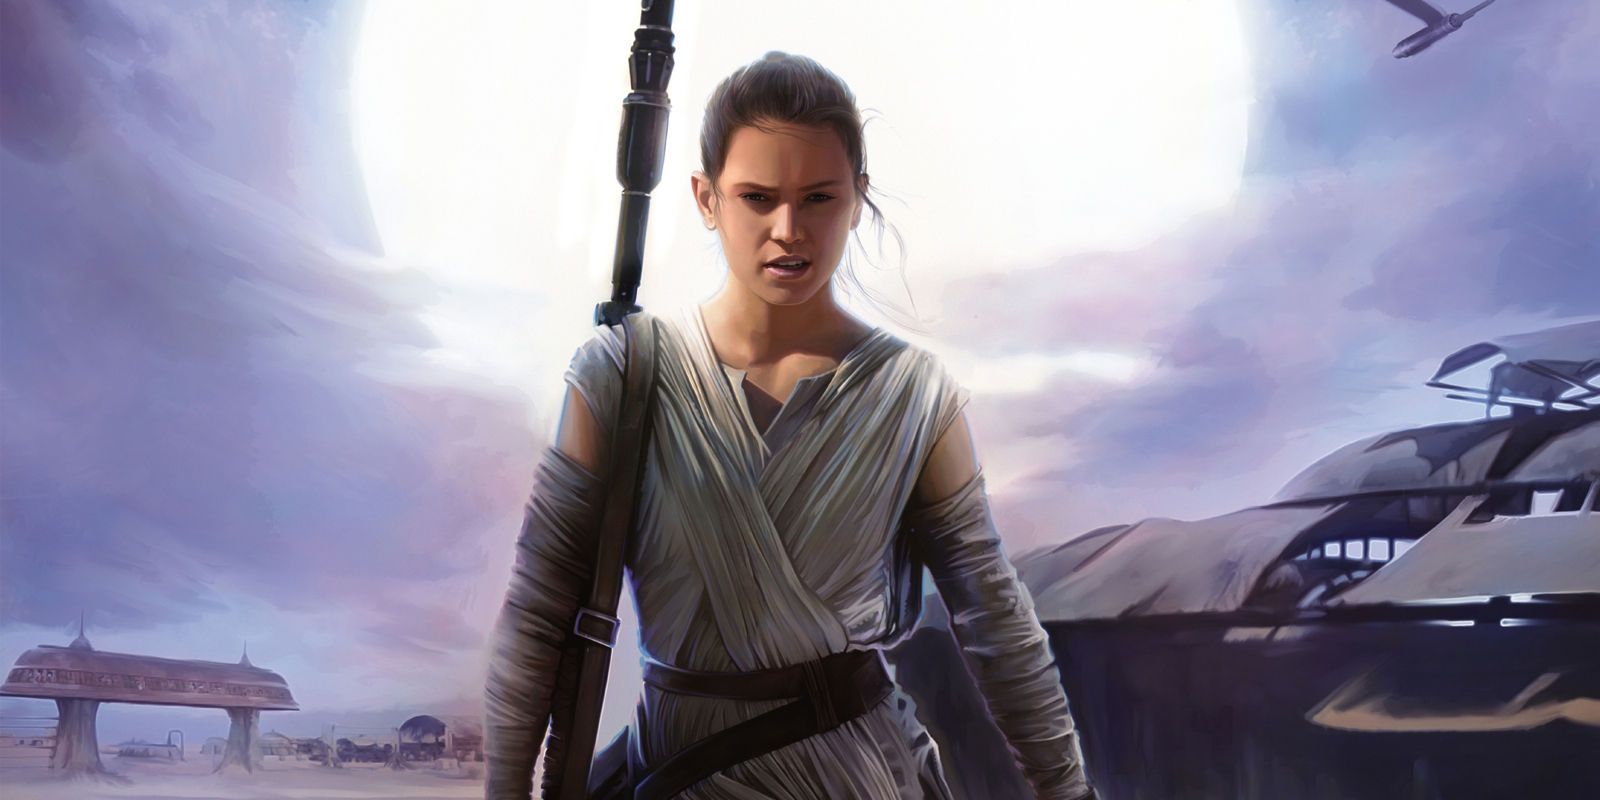 Star Wars: The Force Awakens' Box Office Final Tally: $ Million